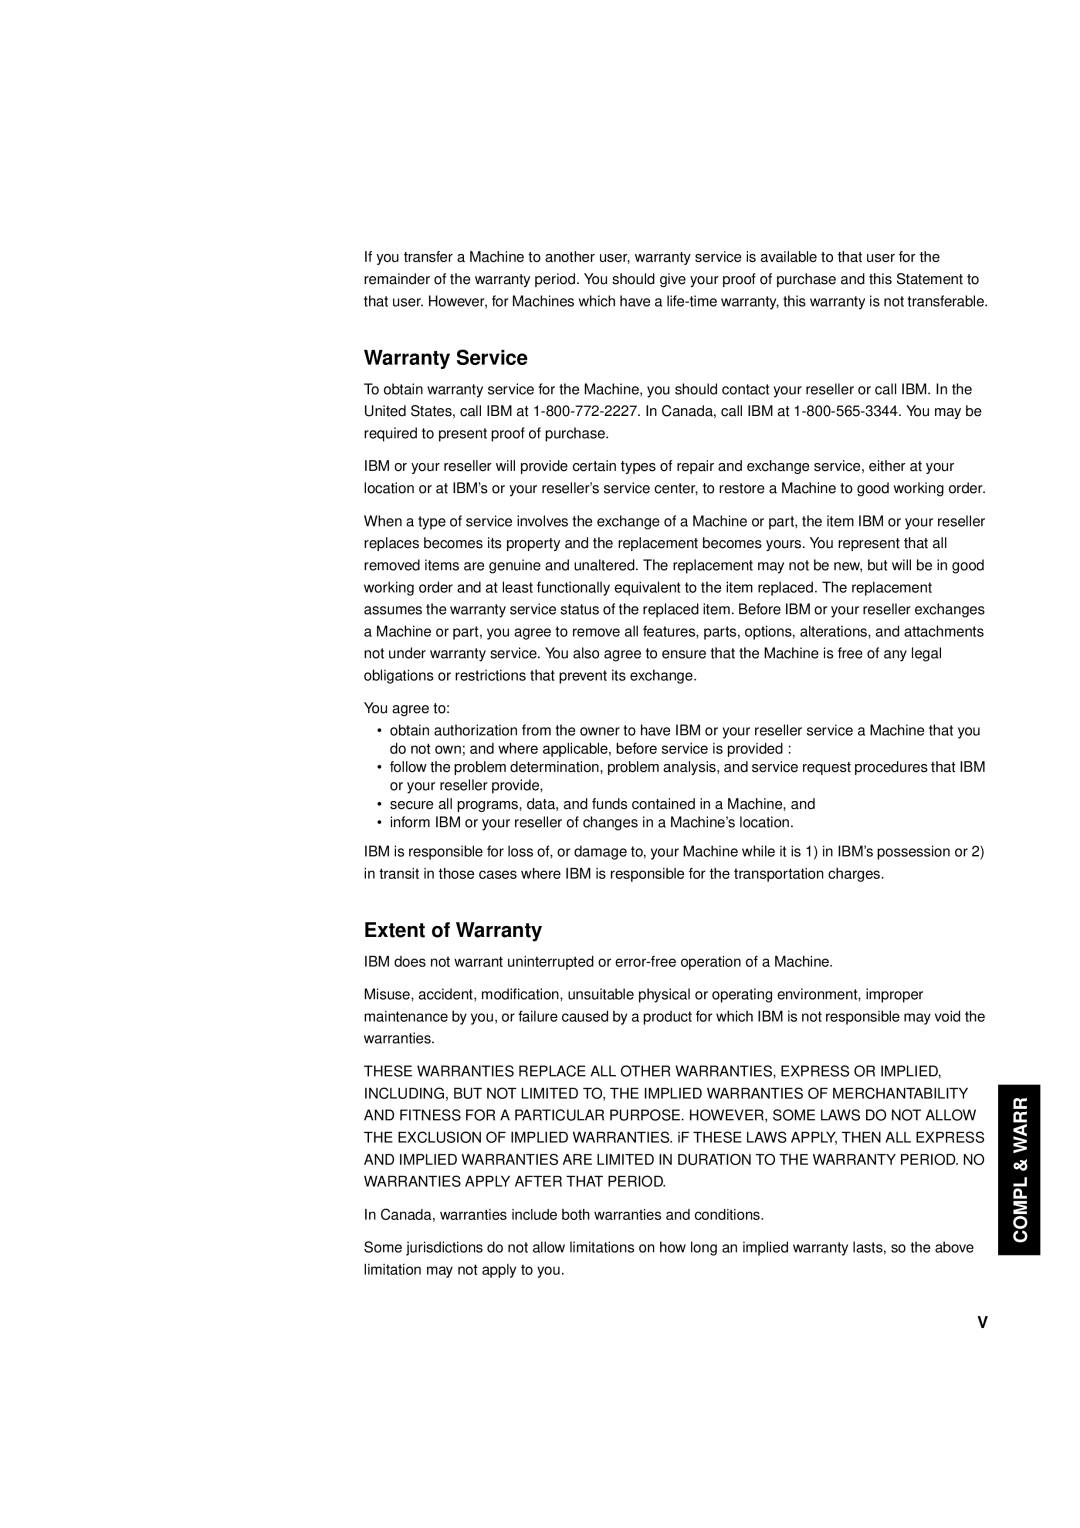 IBM T 55A manual Warranty Service, Extent of Warranty, Compl & Warr 